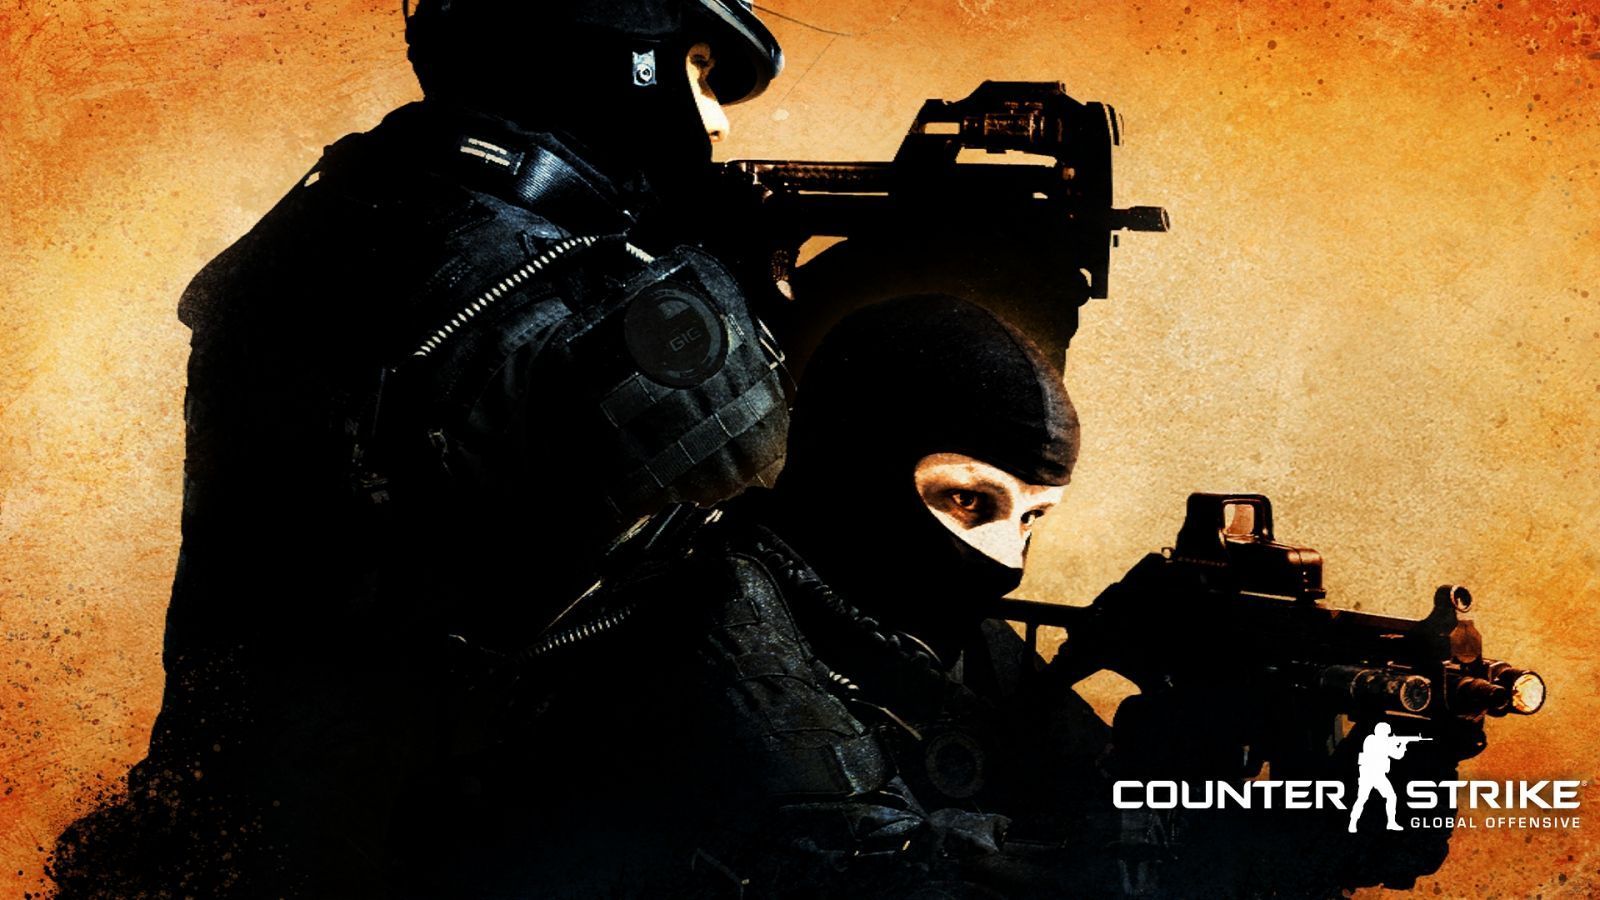 Download Counter Strike Wallpaper 7816 1920x1080 px High resolution